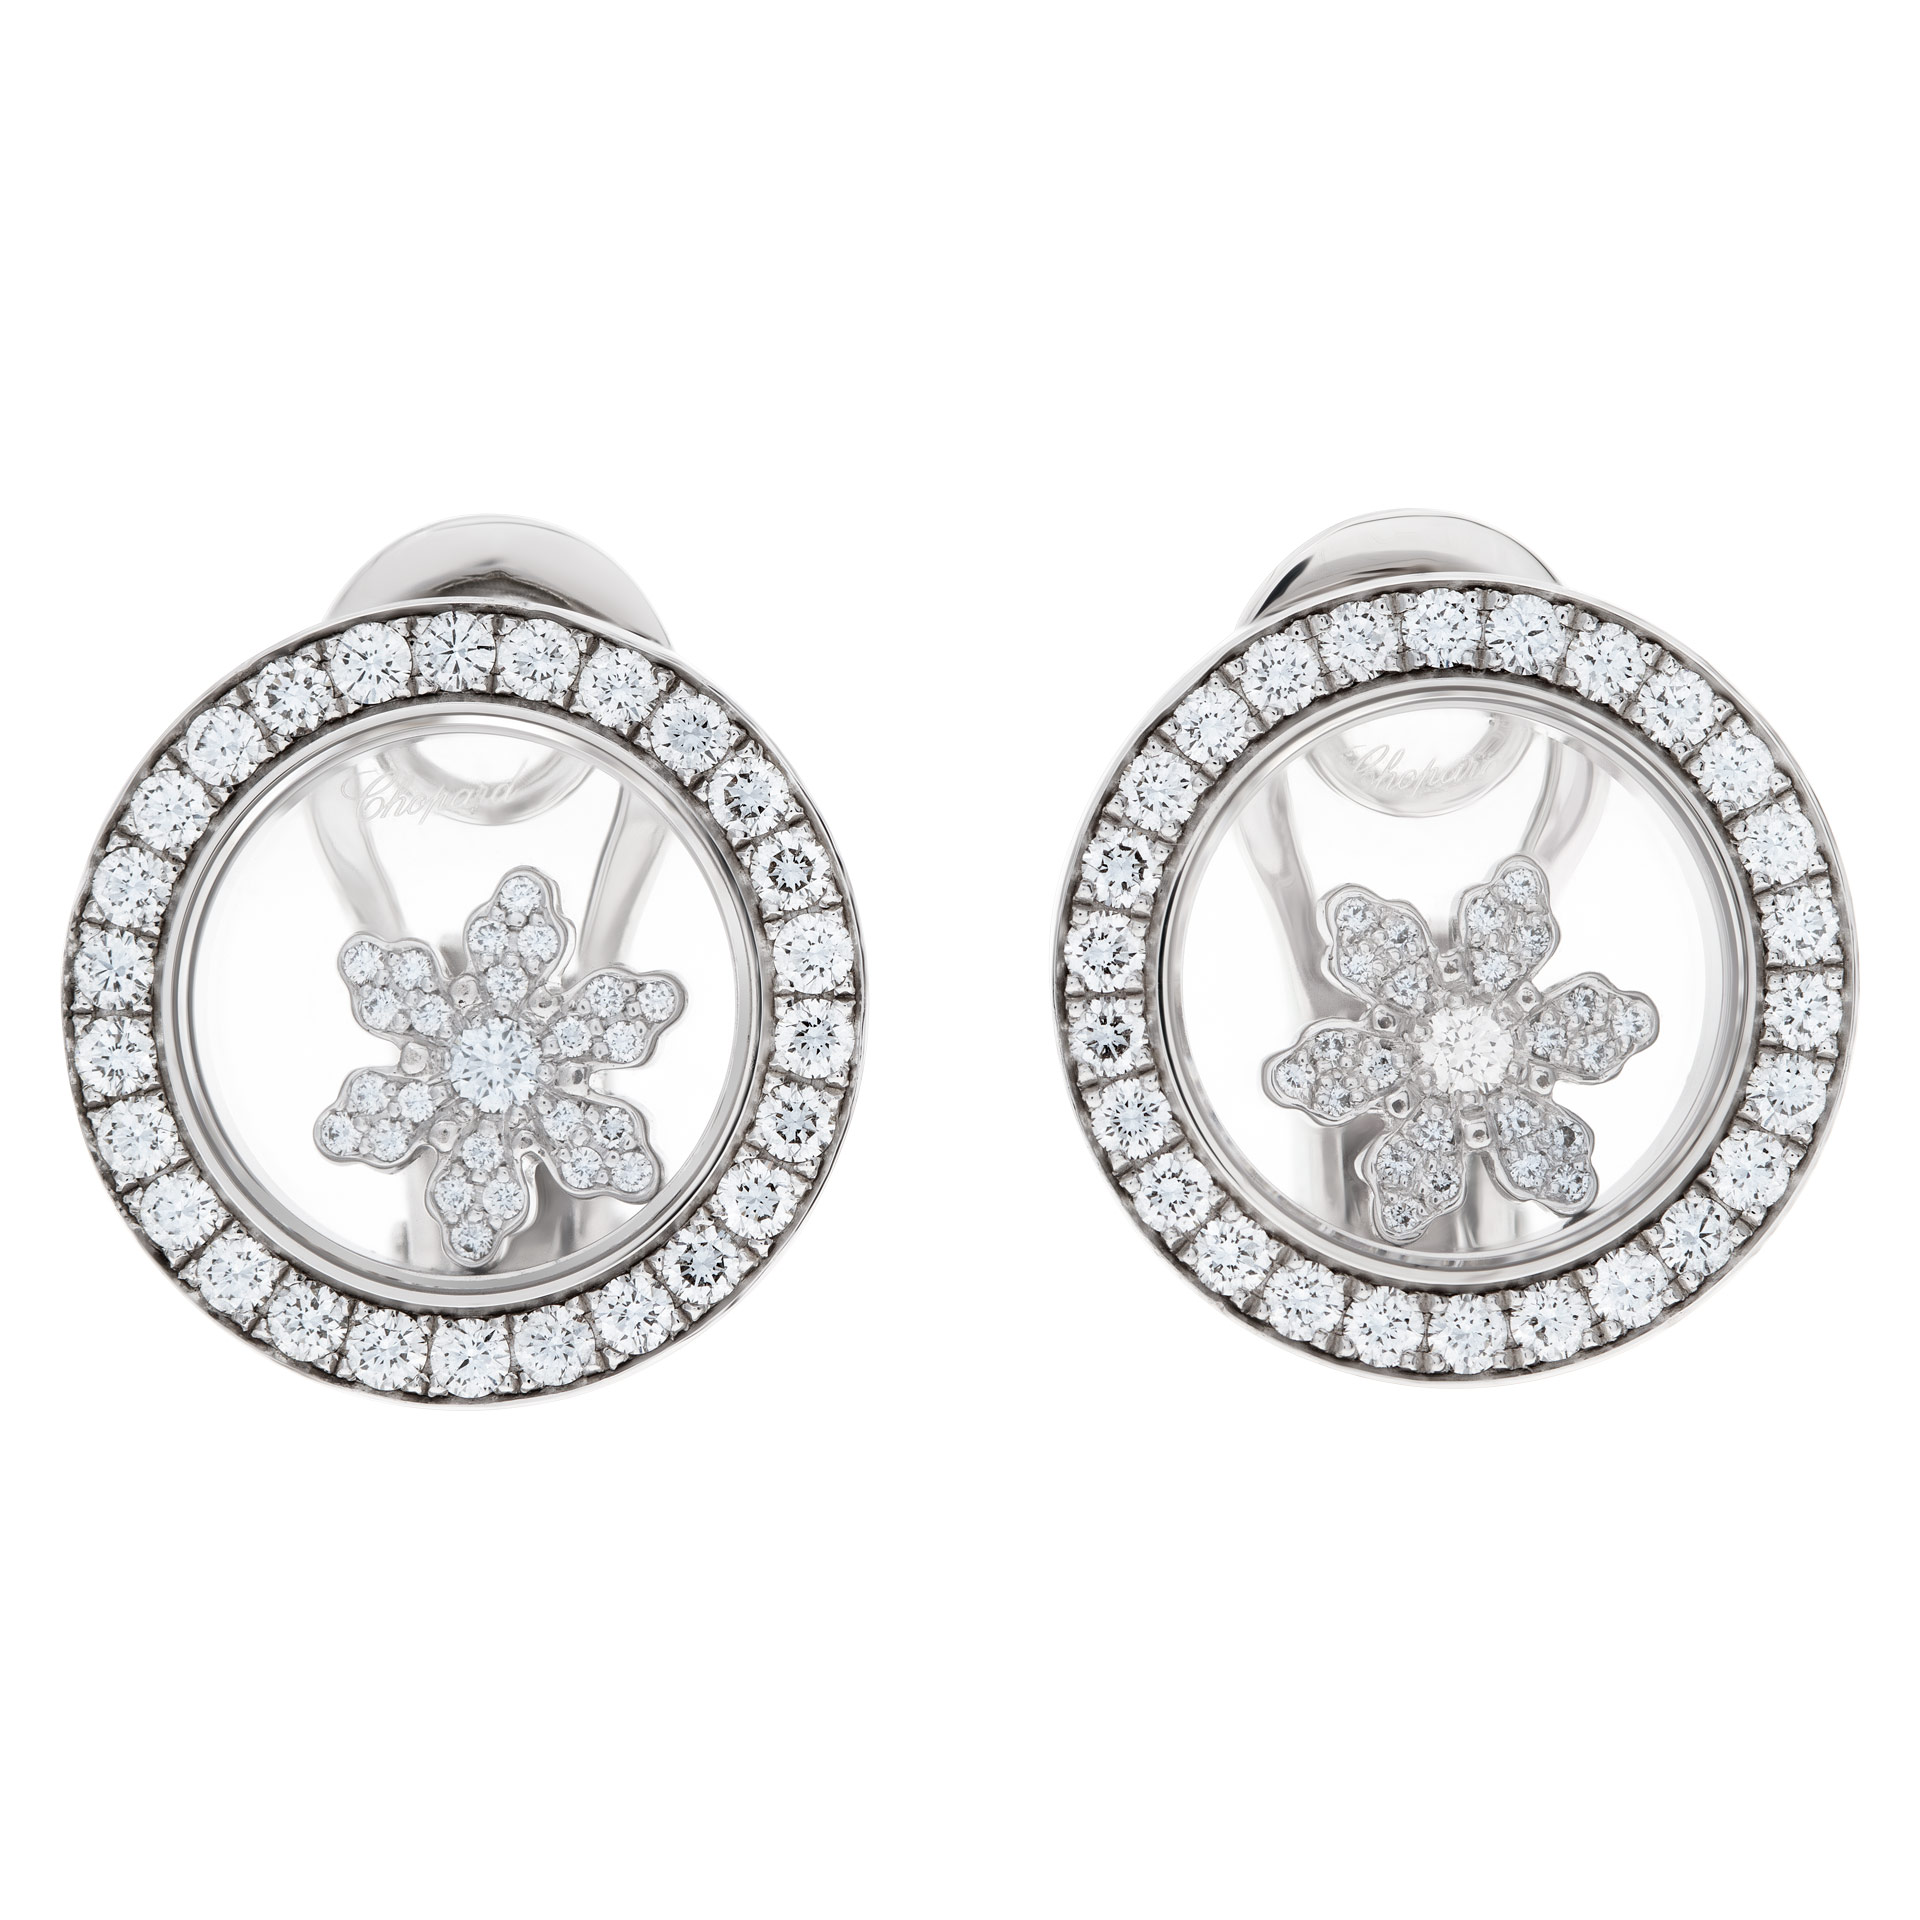 Chopard Happy Sport Snowflake earrings in 18k white gold. 1.06 carats